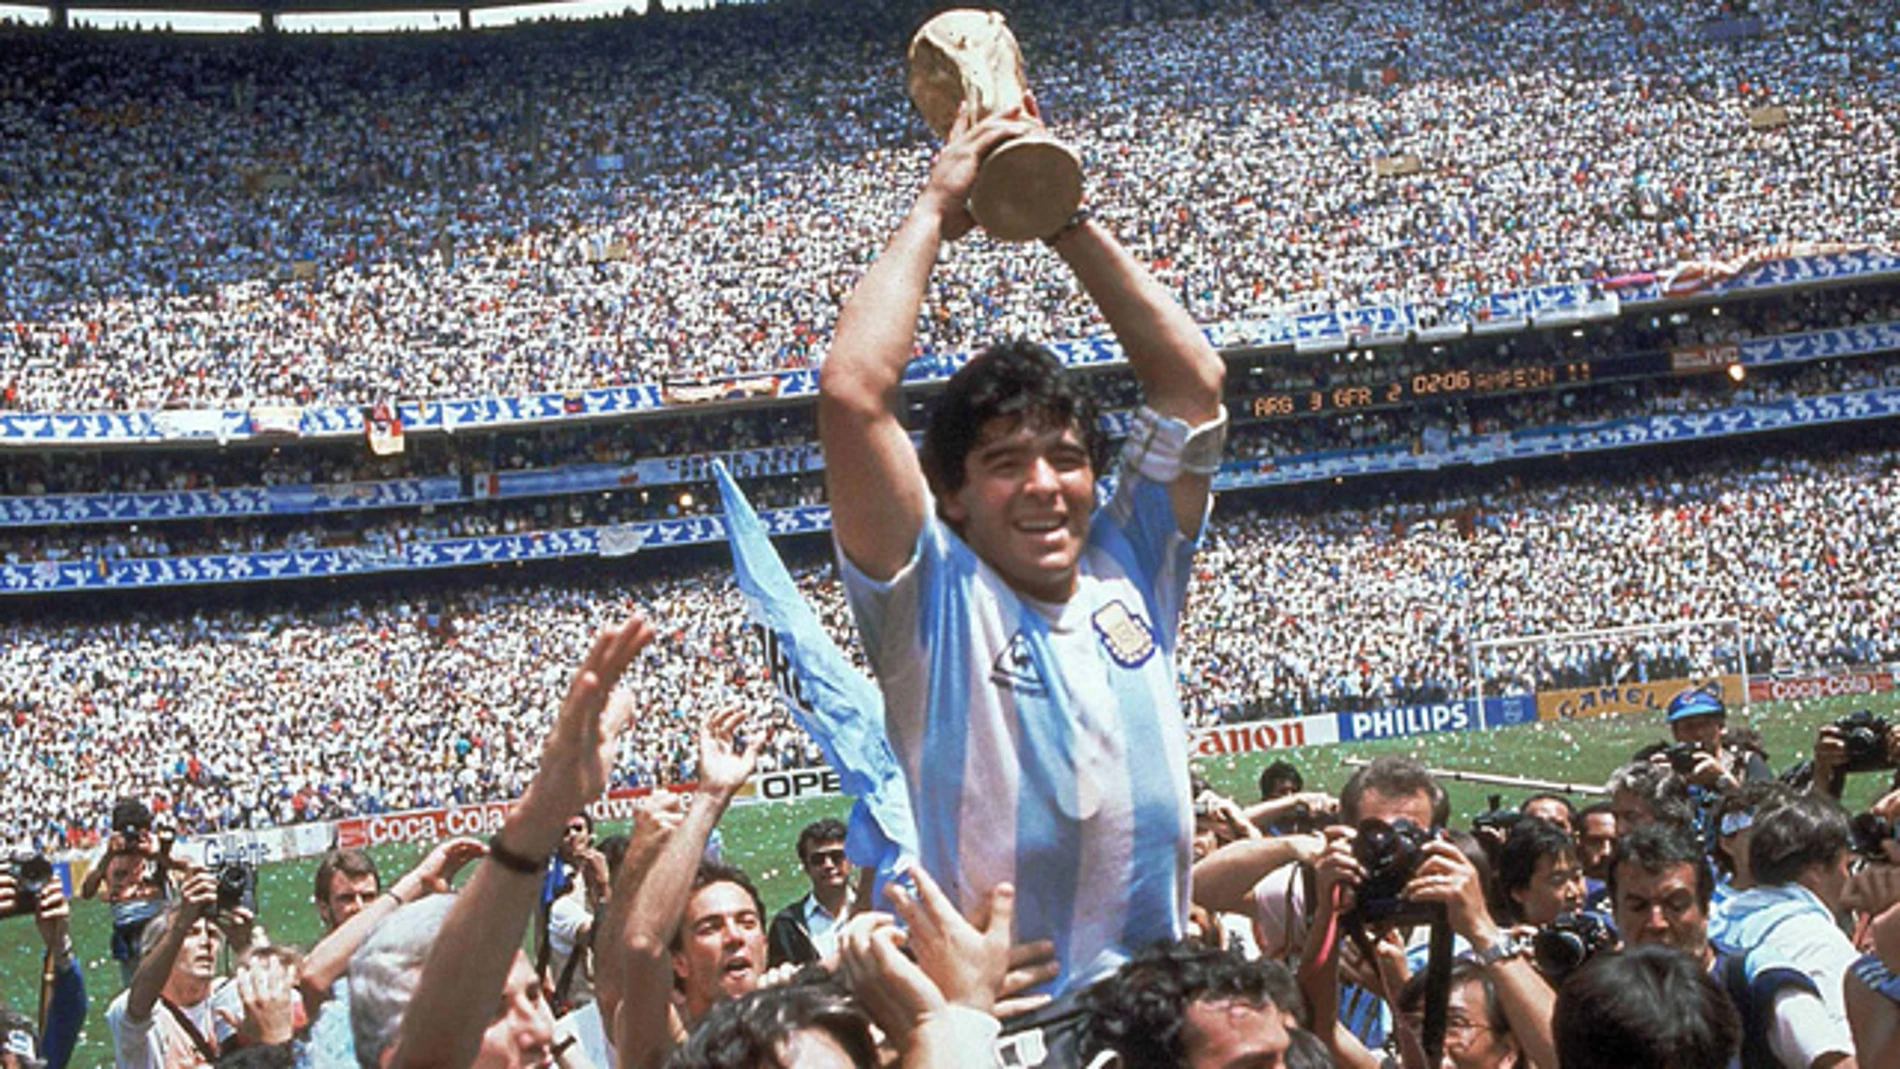 Maradona alzando la copa del Mundial de 1986